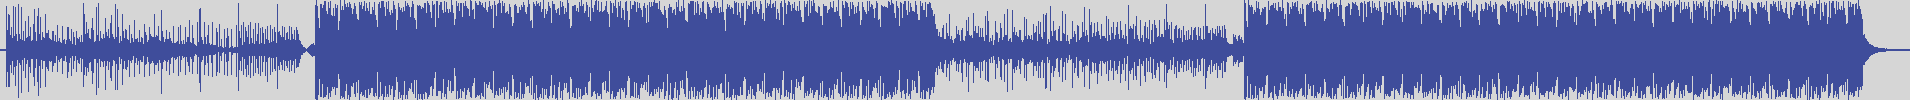 nf_boyz_records [NFY017] Ulisse Sinclard - Epopea [Club Mix] audio wave form